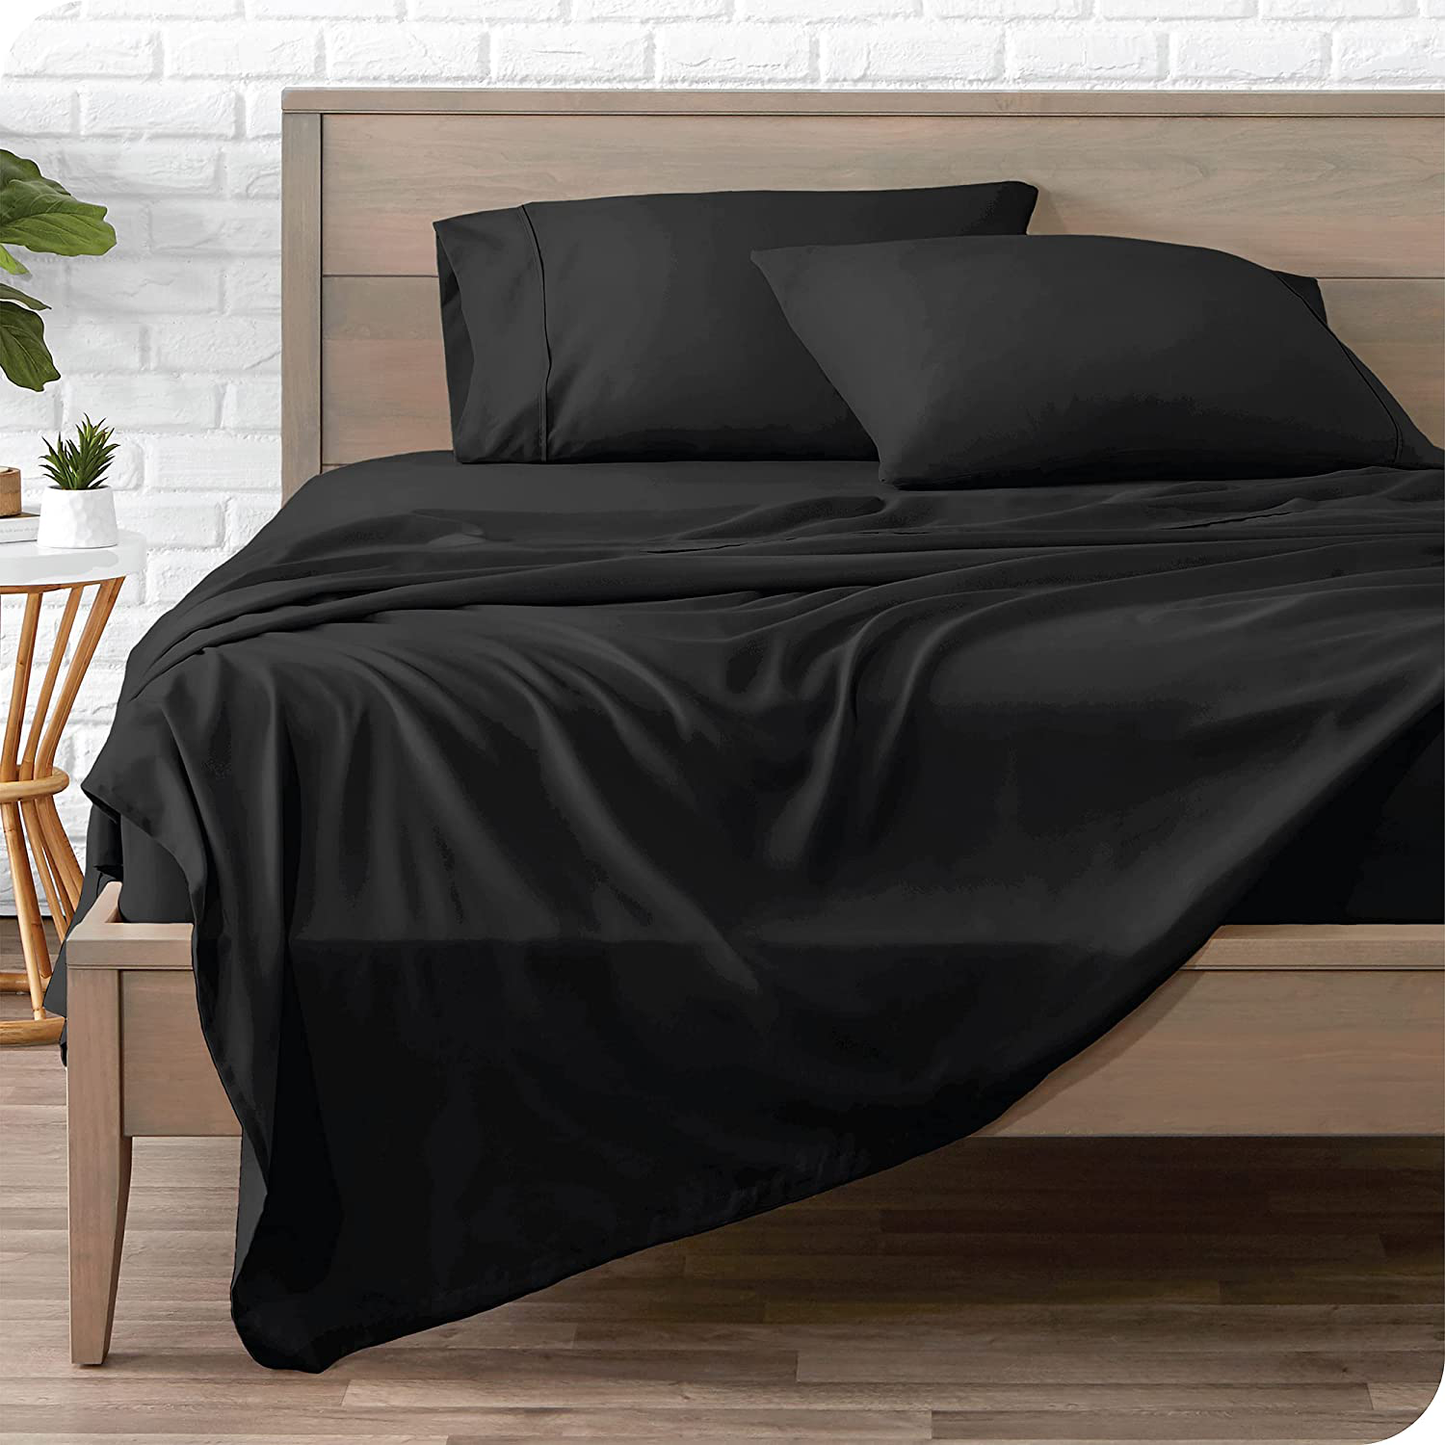 Bare Home King Sheet Set - 1800 Ultra-Soft Microfiber King Bed Sheets - Double Brushed - King Sheets Set - Deep Pocket - Bedding Sheets & Pillowcases (King, Heathered Pewter)